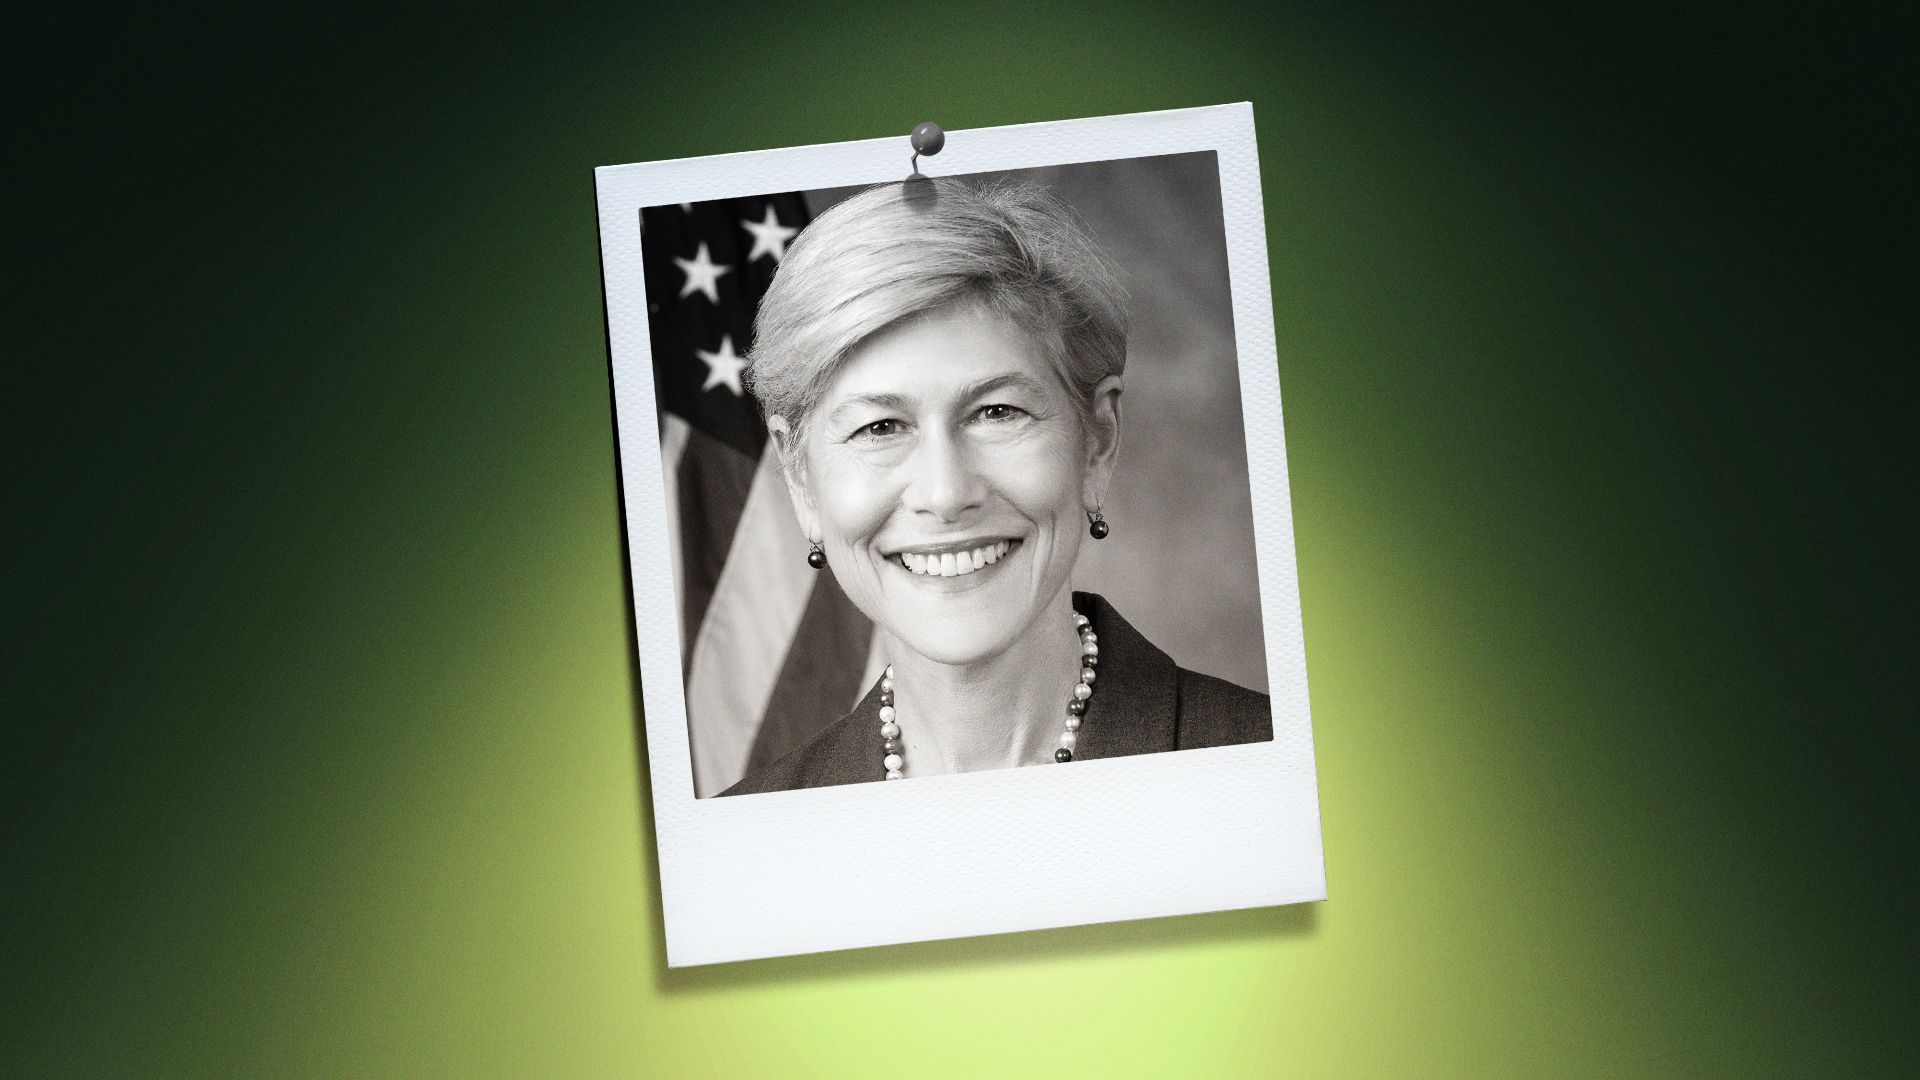 Photo illustration of Representative Deborah Ross in the center of a Polaroid photo under a green spotlight.